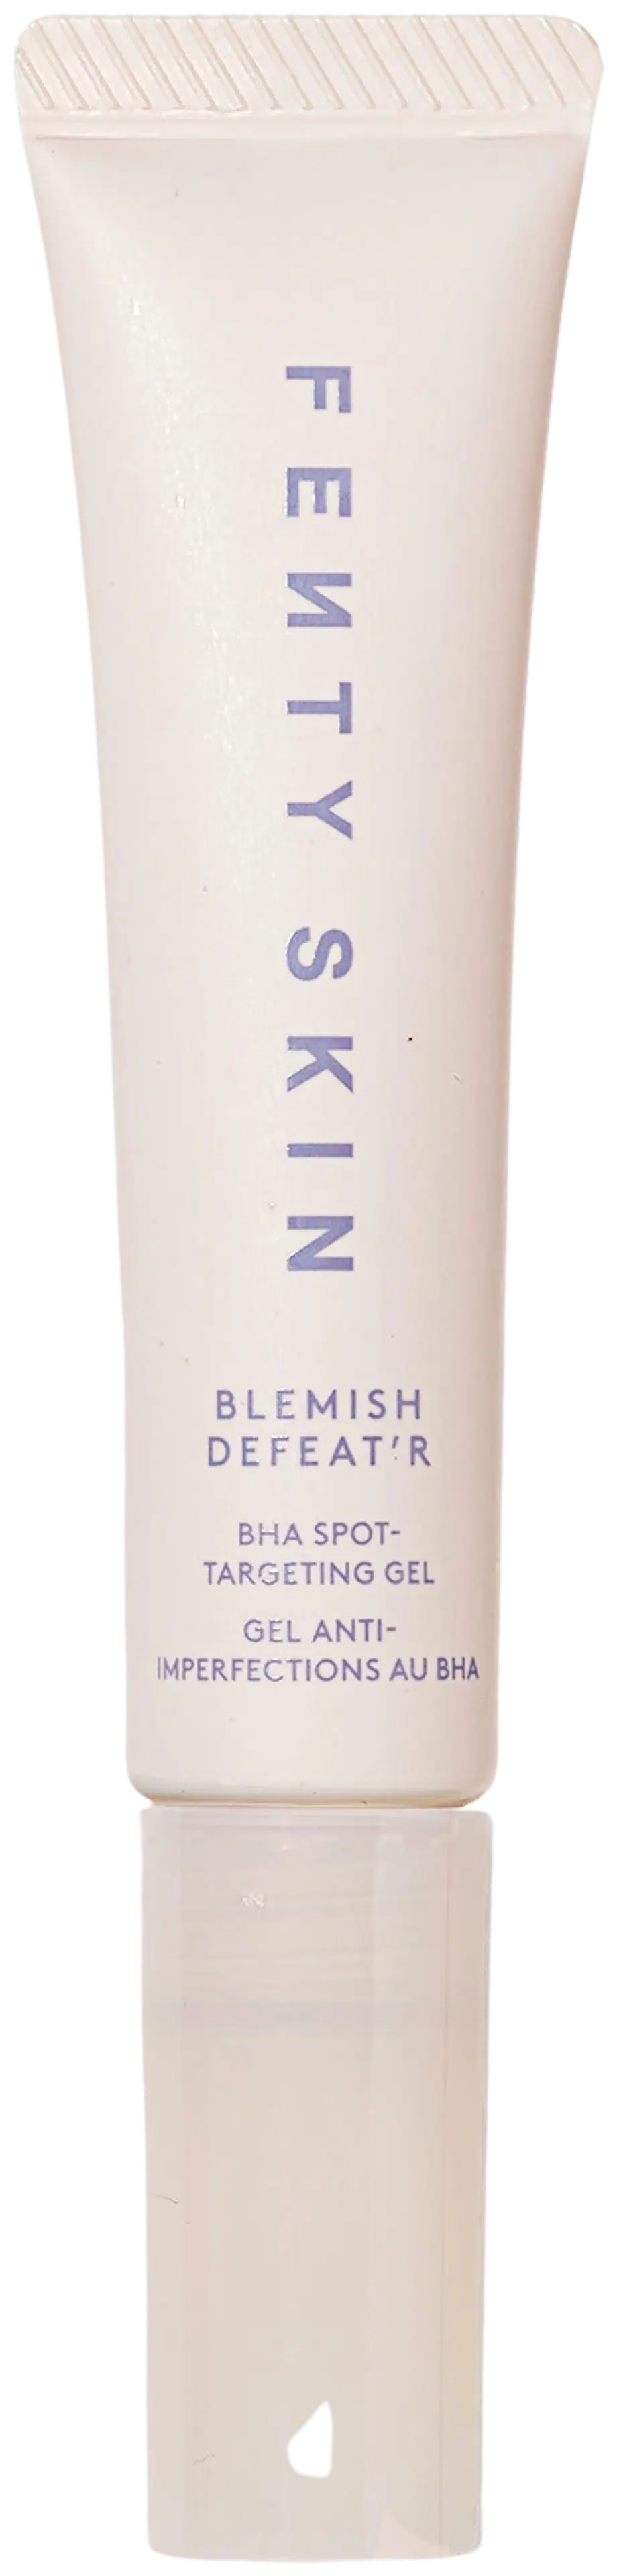 Fenty Skin Blemish Defeat'r BHA Spot-Targeting Gel geeli finnien hoitoon 15 ml